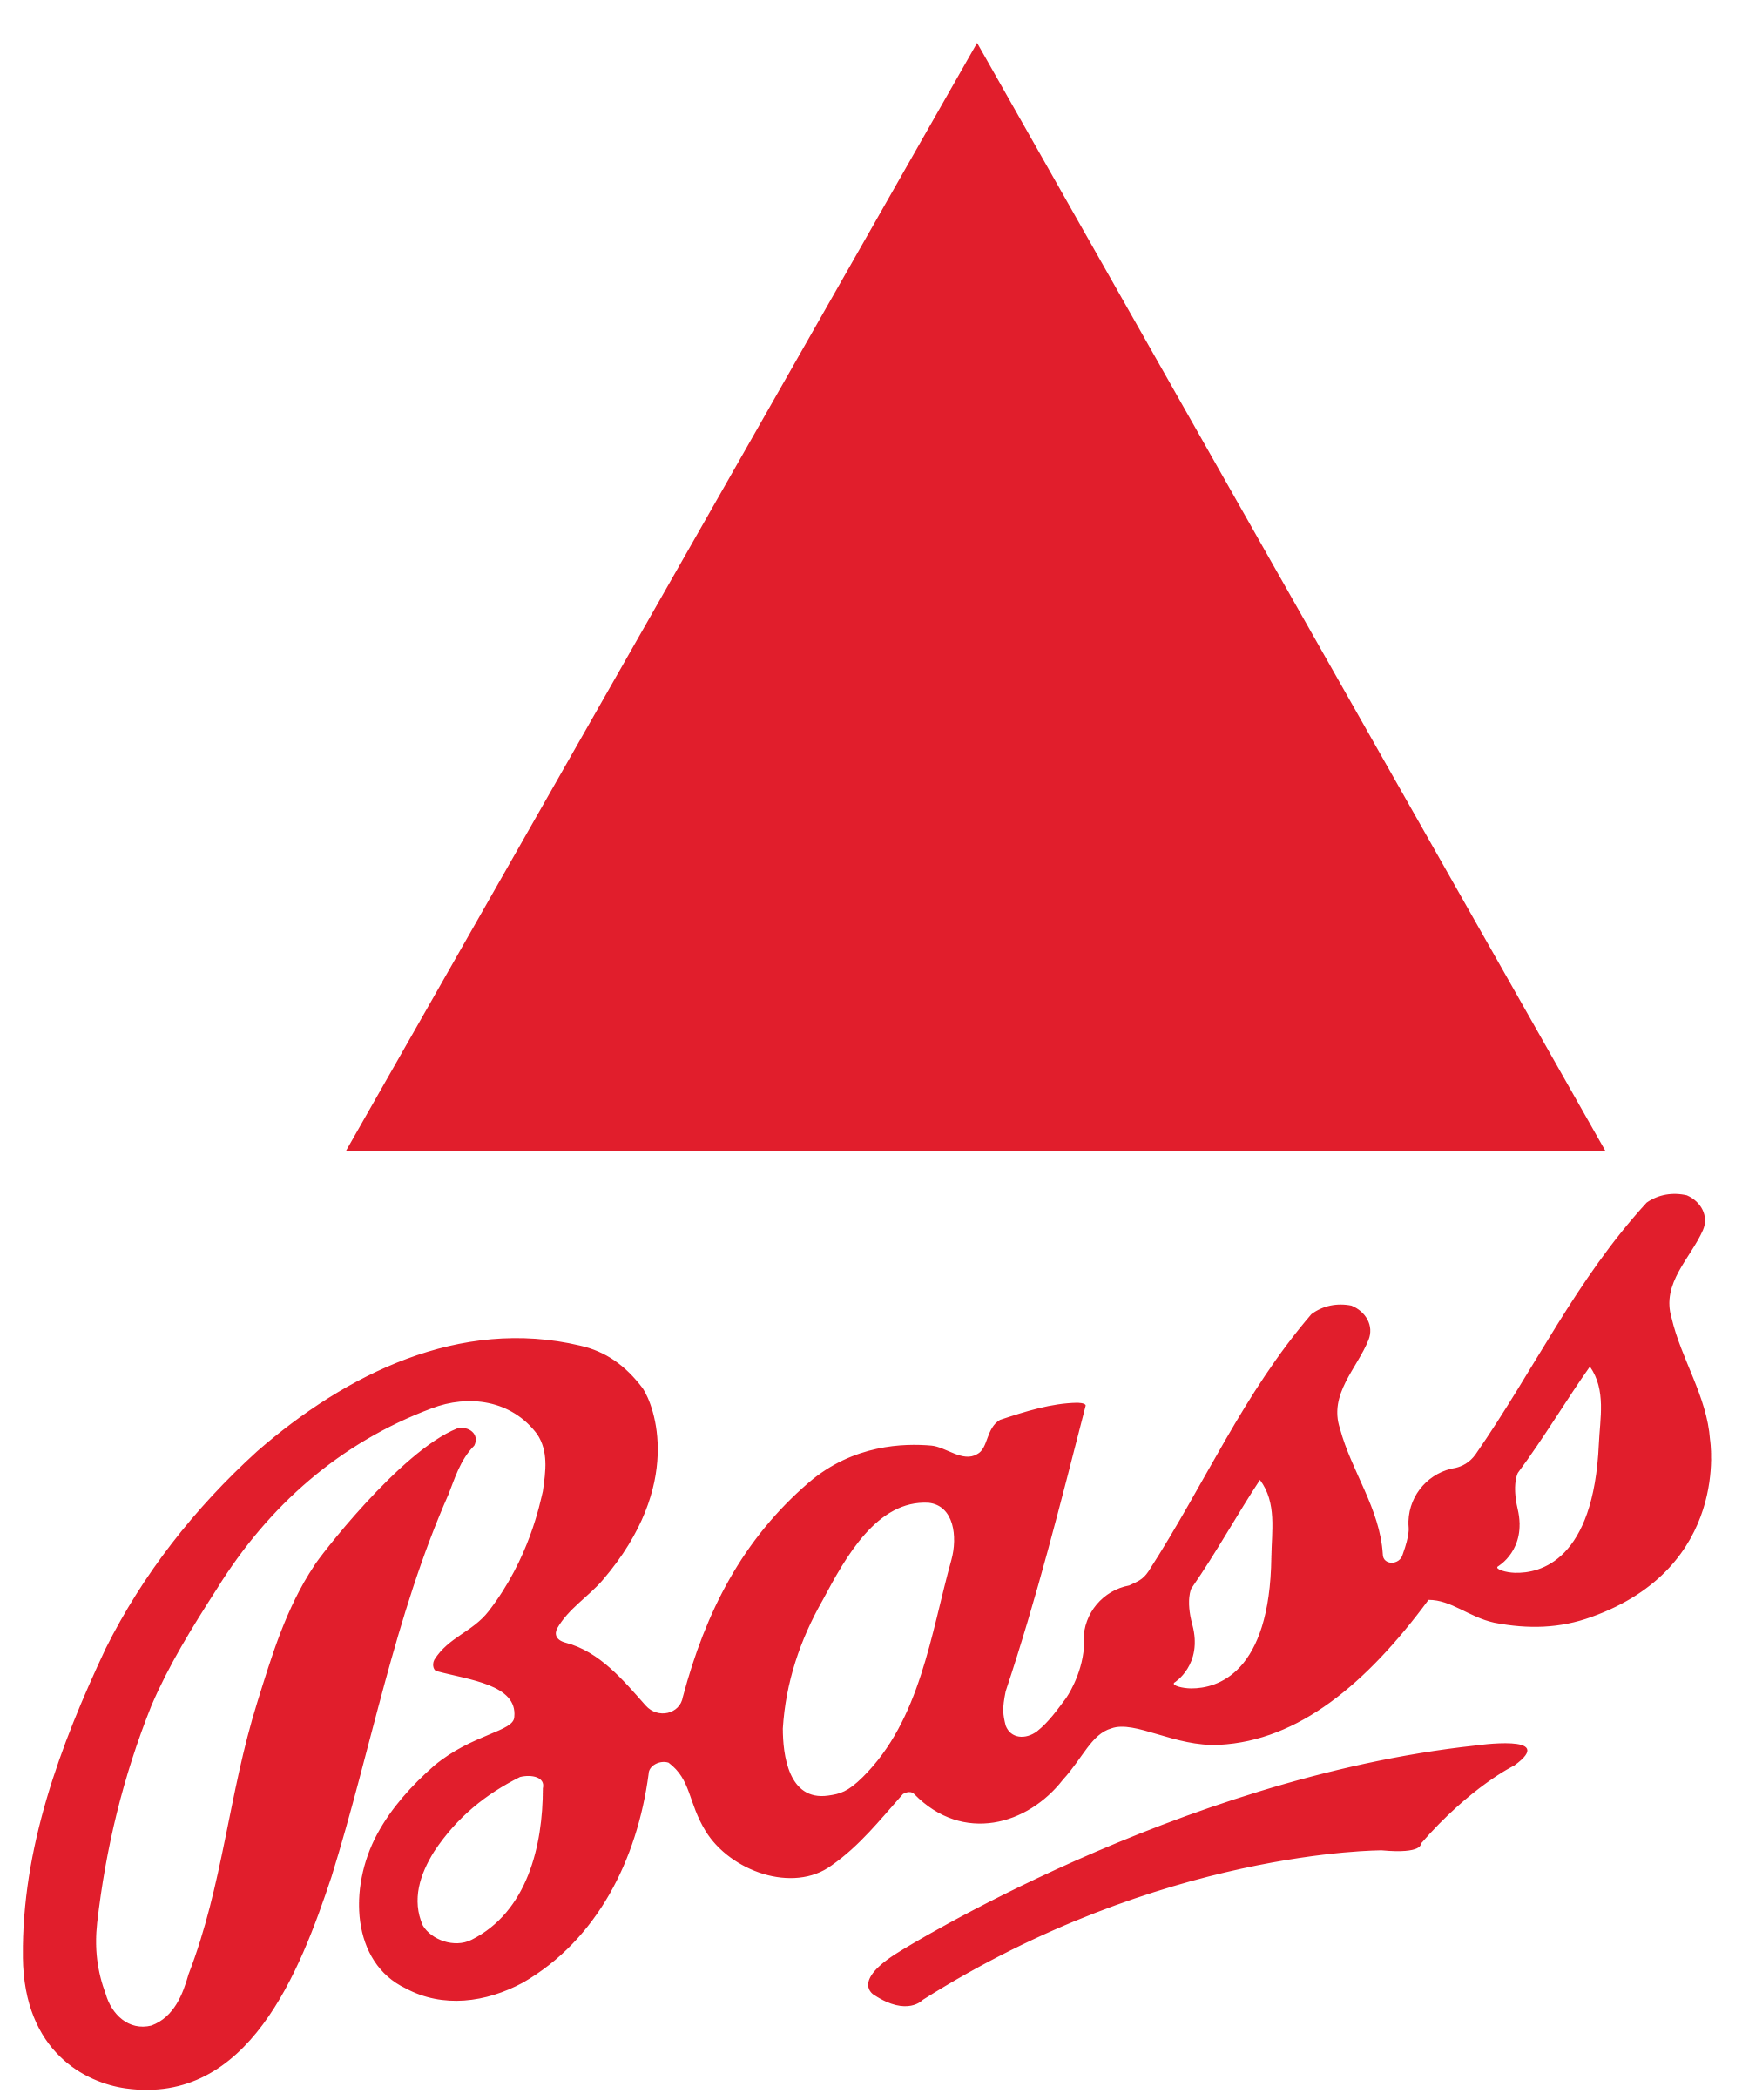 Bass Brewery - Wikipedia, the free encyclopedia